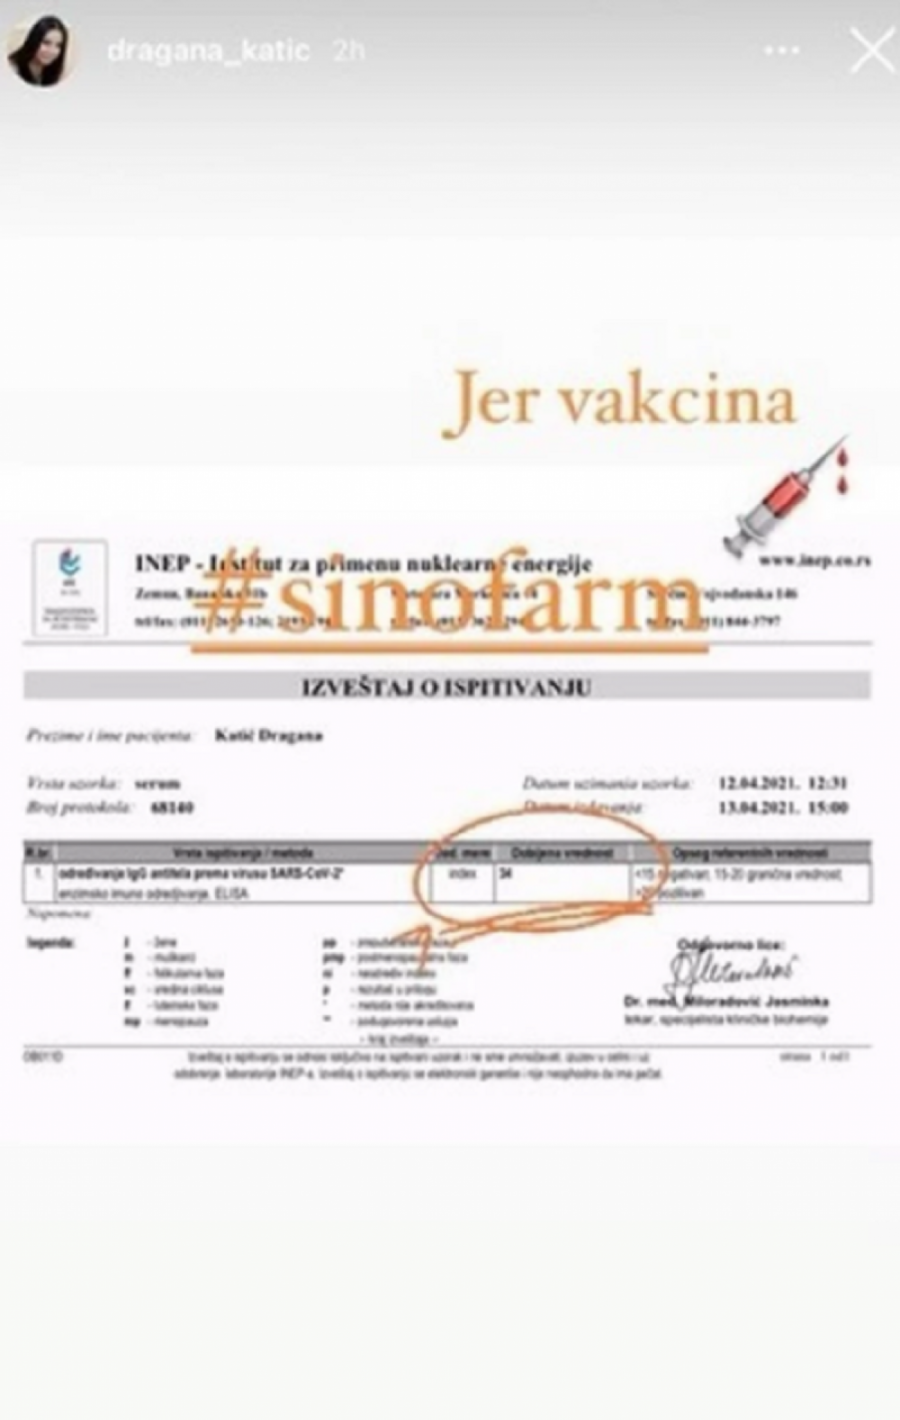 Dragana Katić nakon primljenje kineske vakcine izvadila antitela i objavila rezultate! (FOTO)